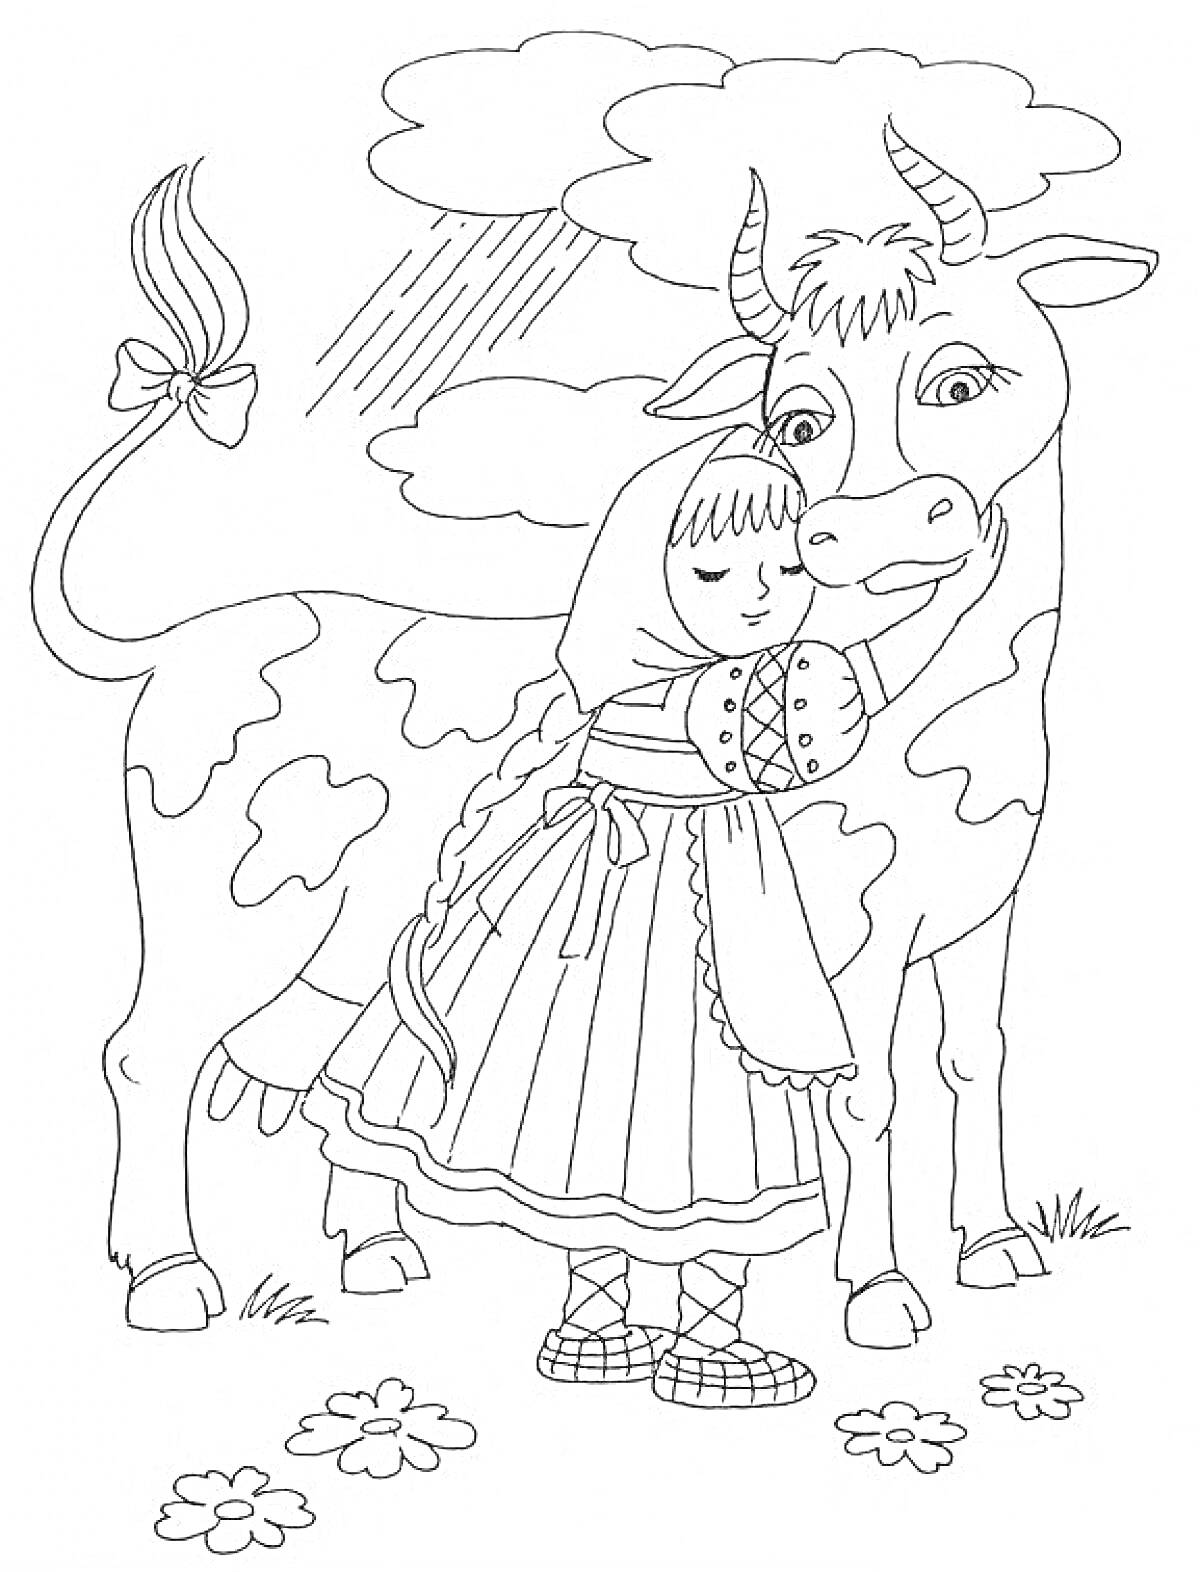 Раскраска Девочка в платочке обнимает корову, на фоне облака и солнышко, на траве стоят цветы